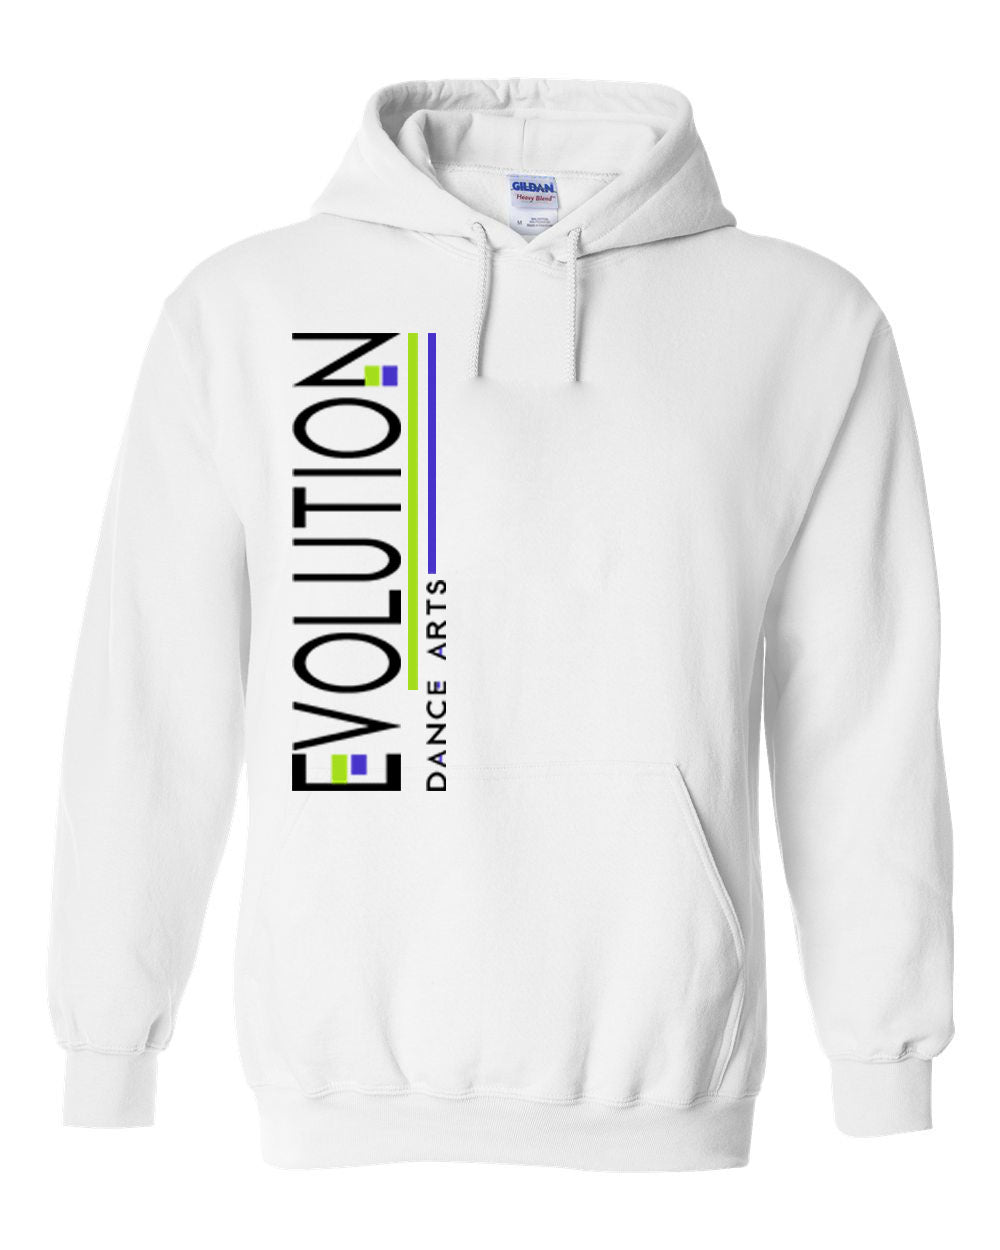 Evolution Dance Design 5 Hooded Sweatshirt